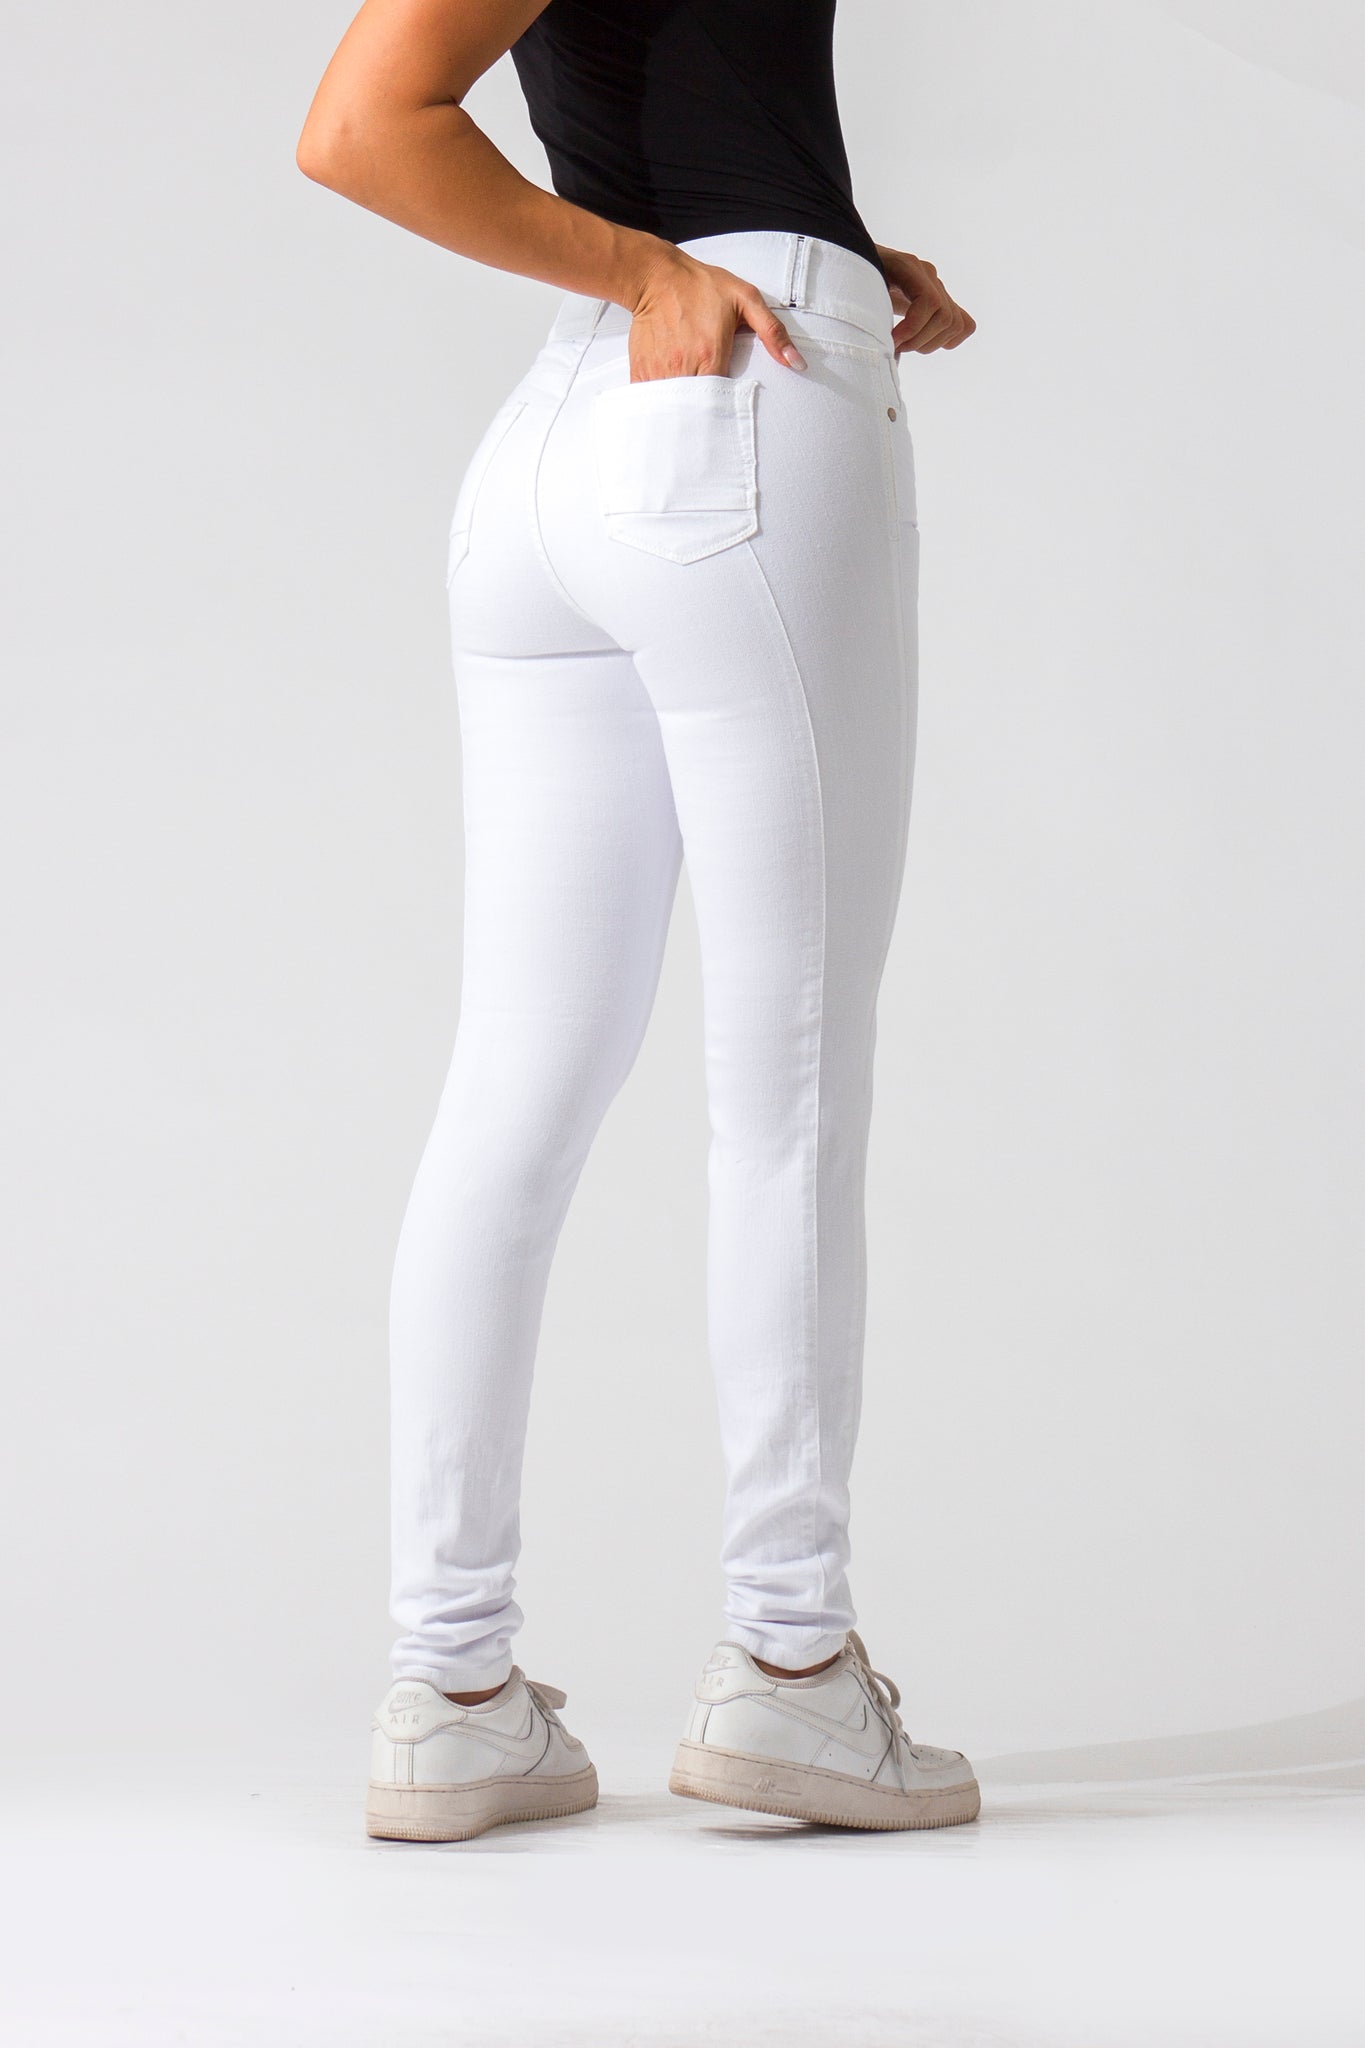 OHPOMP!® Cintura Media Skinny Jeans Blanco S071